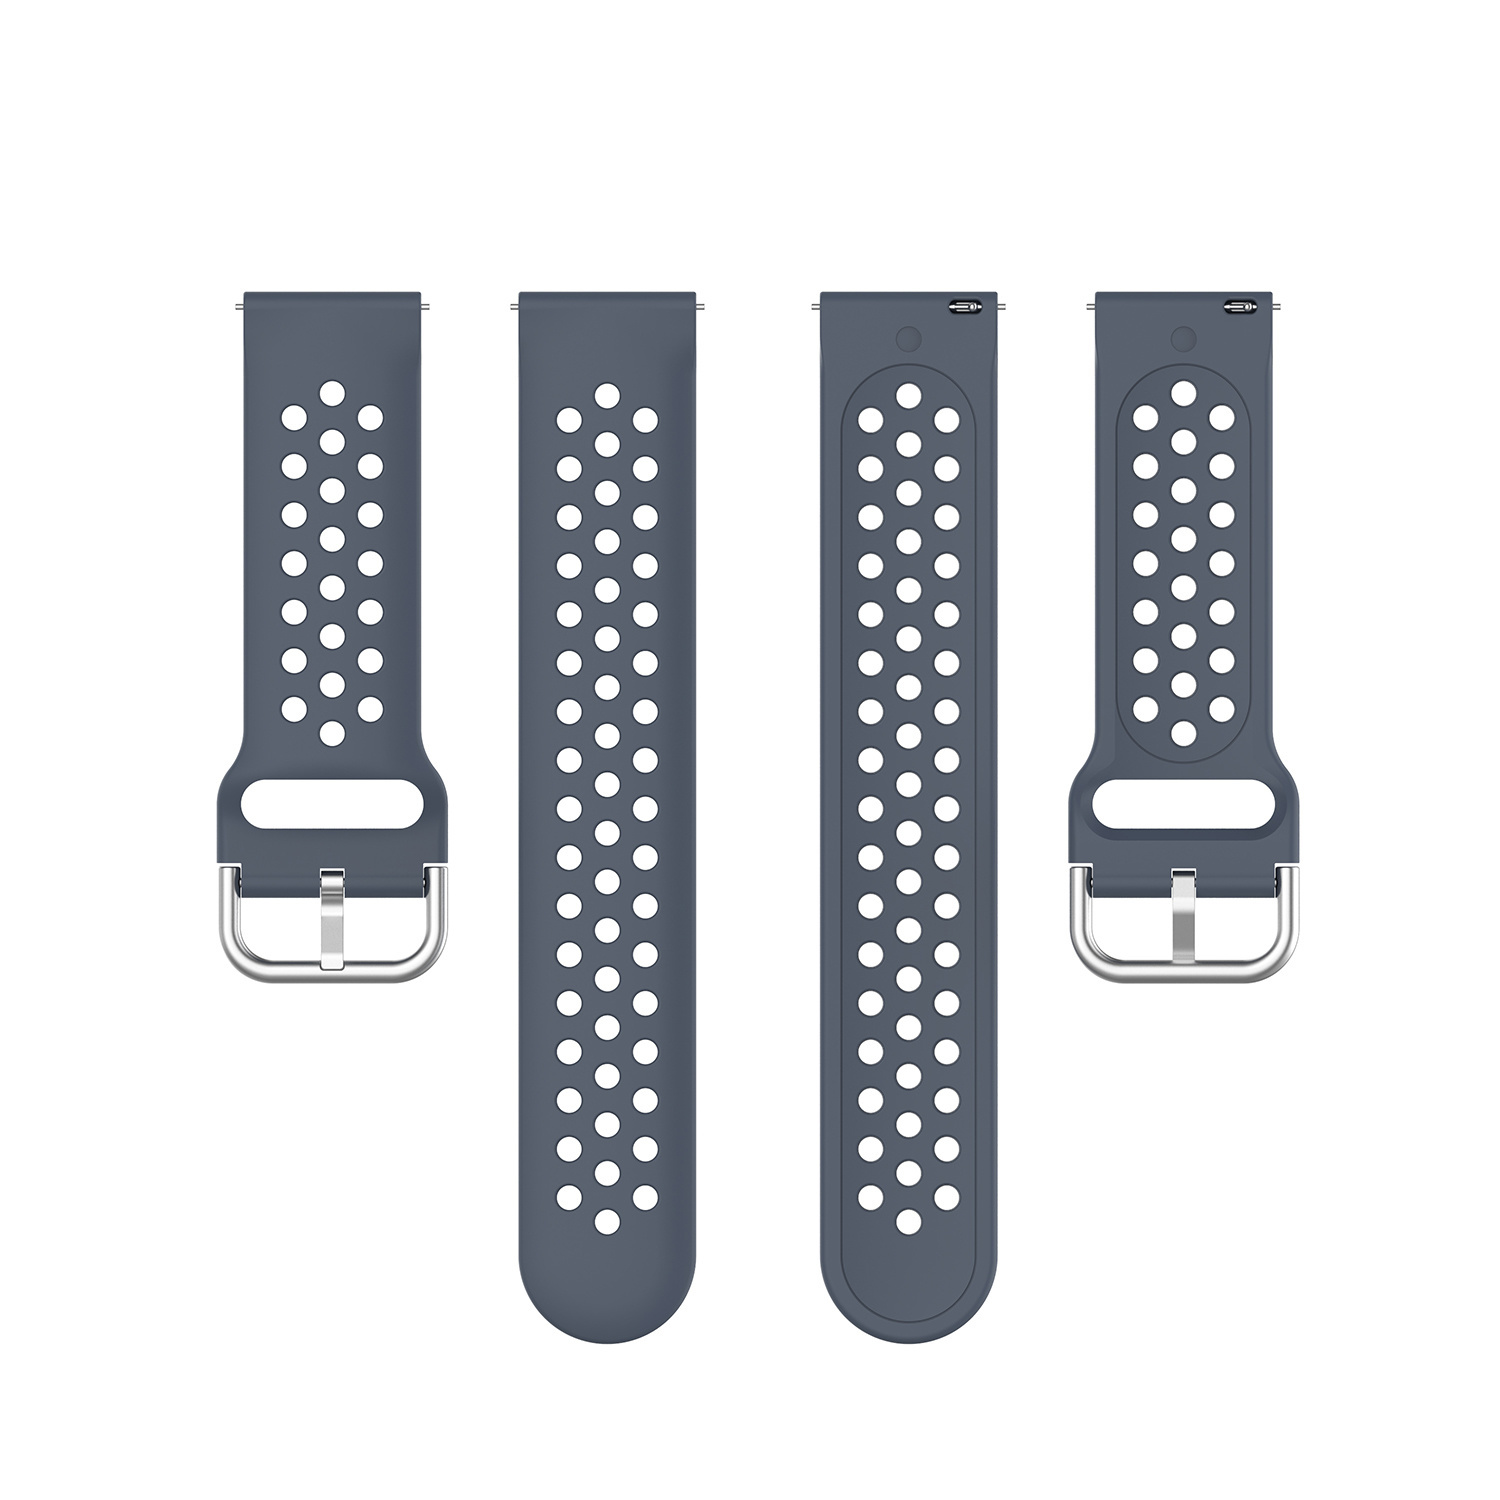 Cinturino doppia fibbia per Samsung Galaxy Watch - grigio